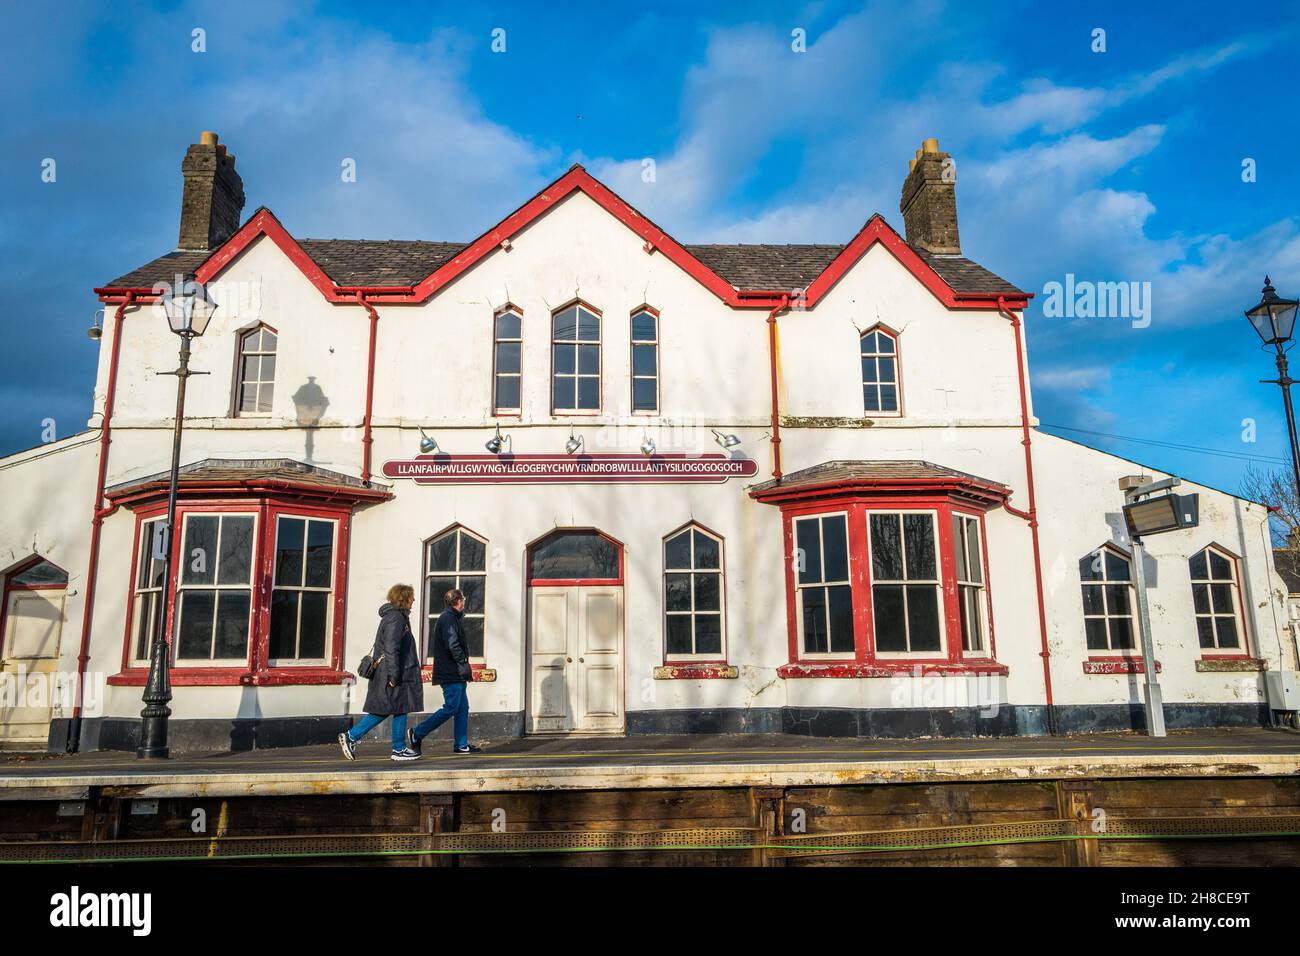 Llanfairpwll stazione ferroviaria. La stazione ferroviaria gallese con il nome più lungo, Llanfairpwlgwyngylgogerychwyrndrobwllllantysiliogogoch. Foto Stock